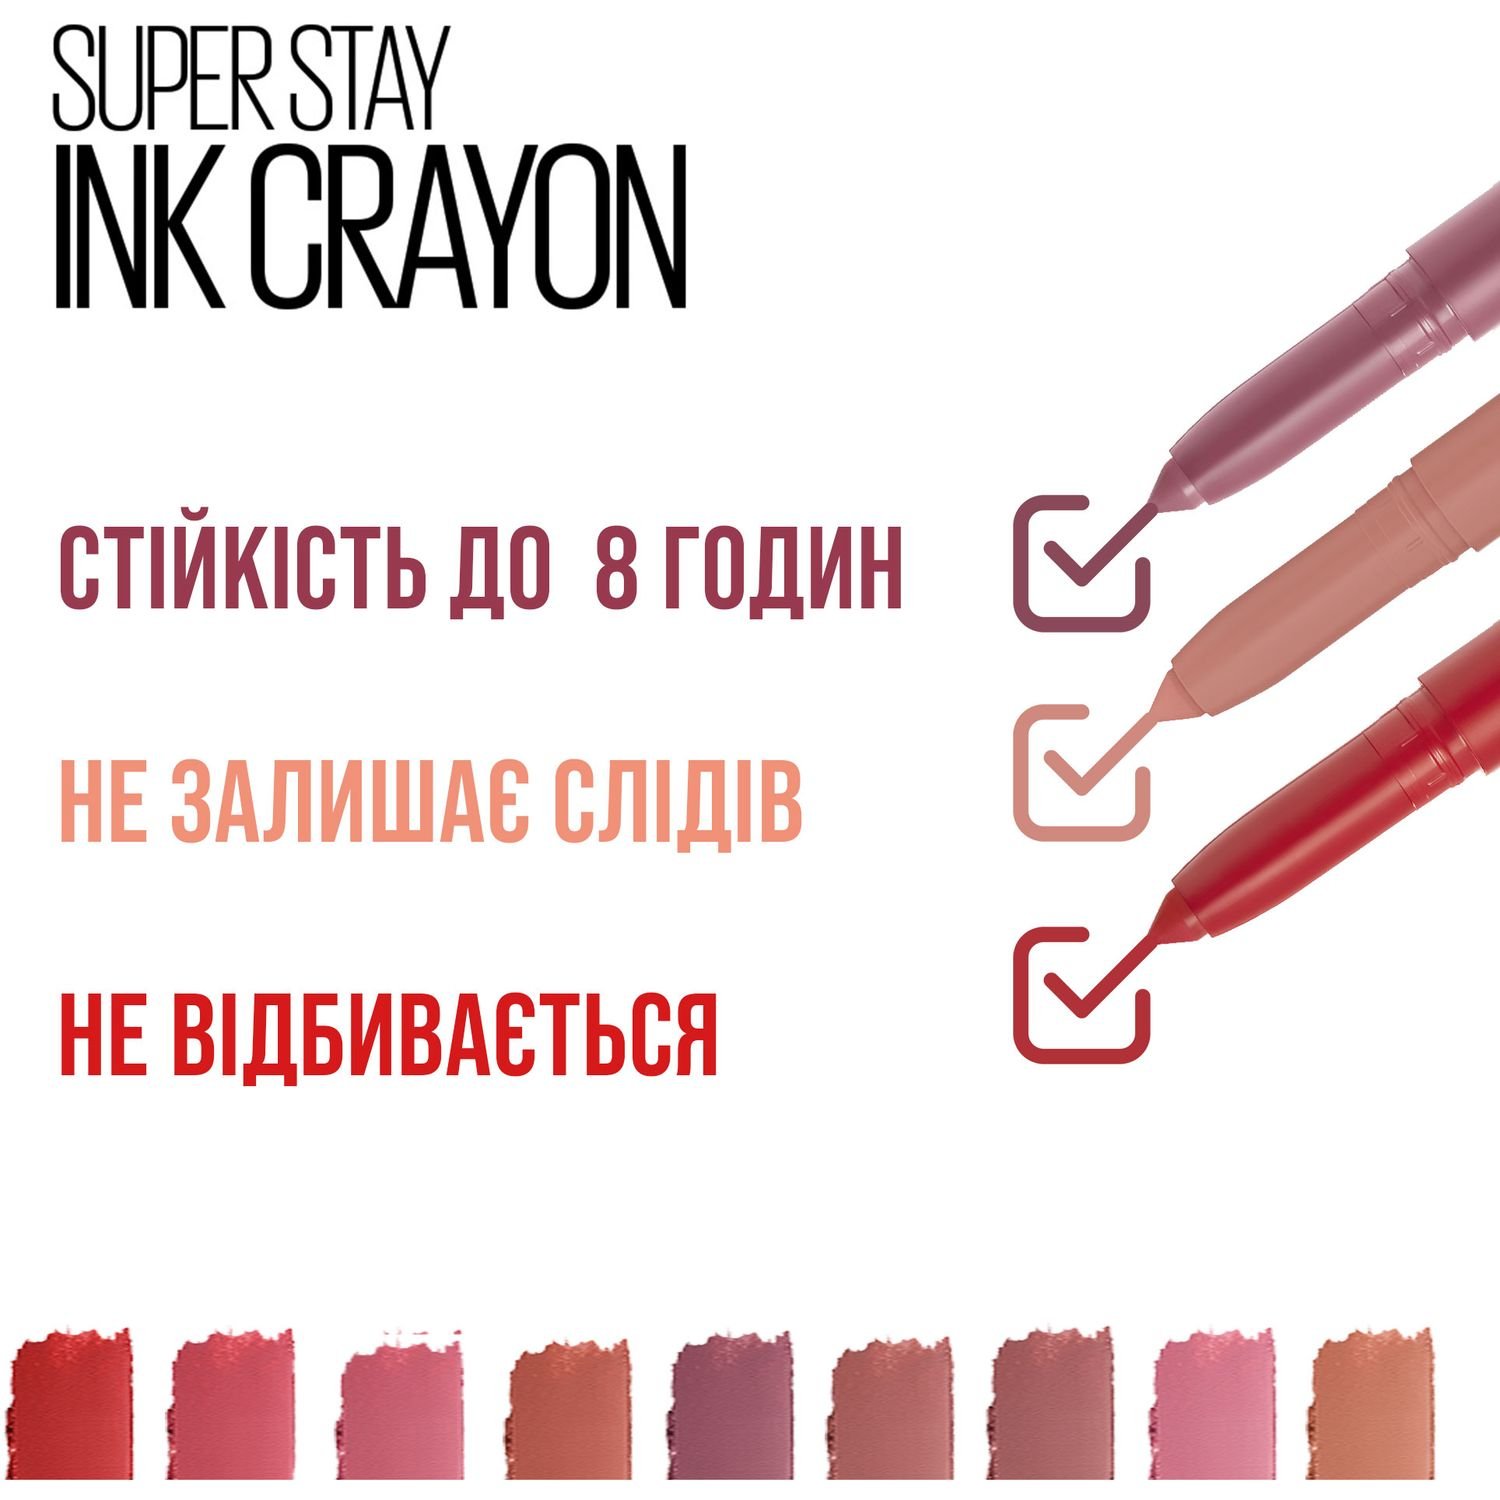 Губная помада-карандаш Maybelline New York Super Stay Ink Crayon, тон 95 (Кремовый Матовый), 2 г (B3331400) - фото 5